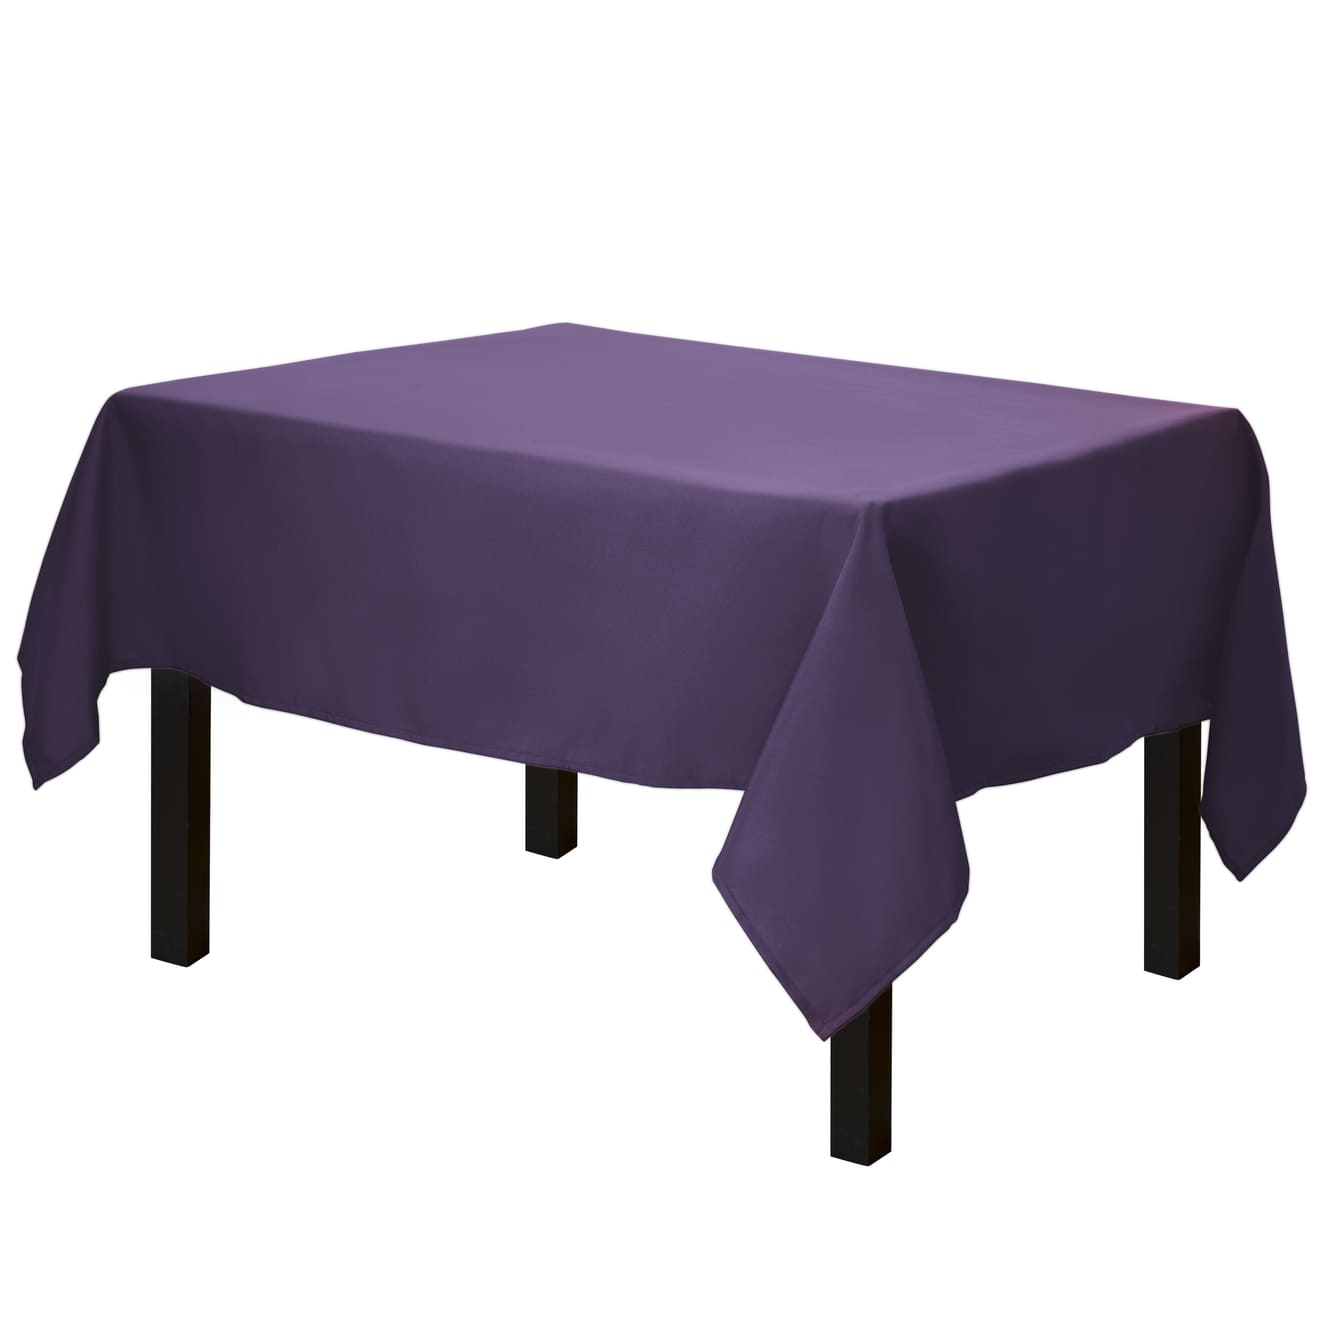 70" Inch Round Tablecloth,Burgundy Gee Di Moda Tablecloth 